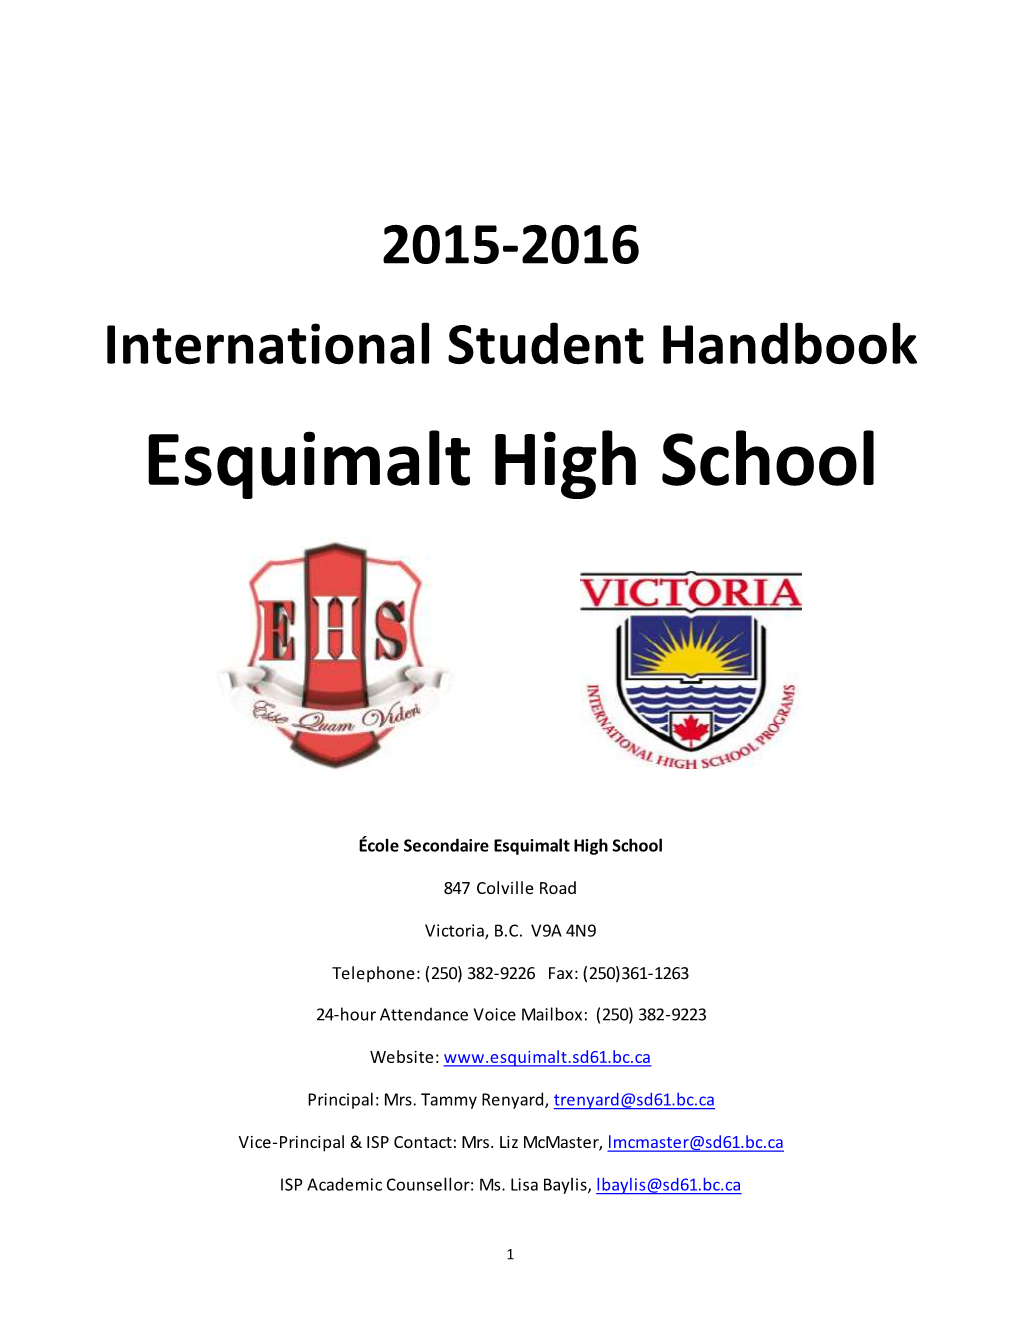 International Student Handbook Esquimalt High School